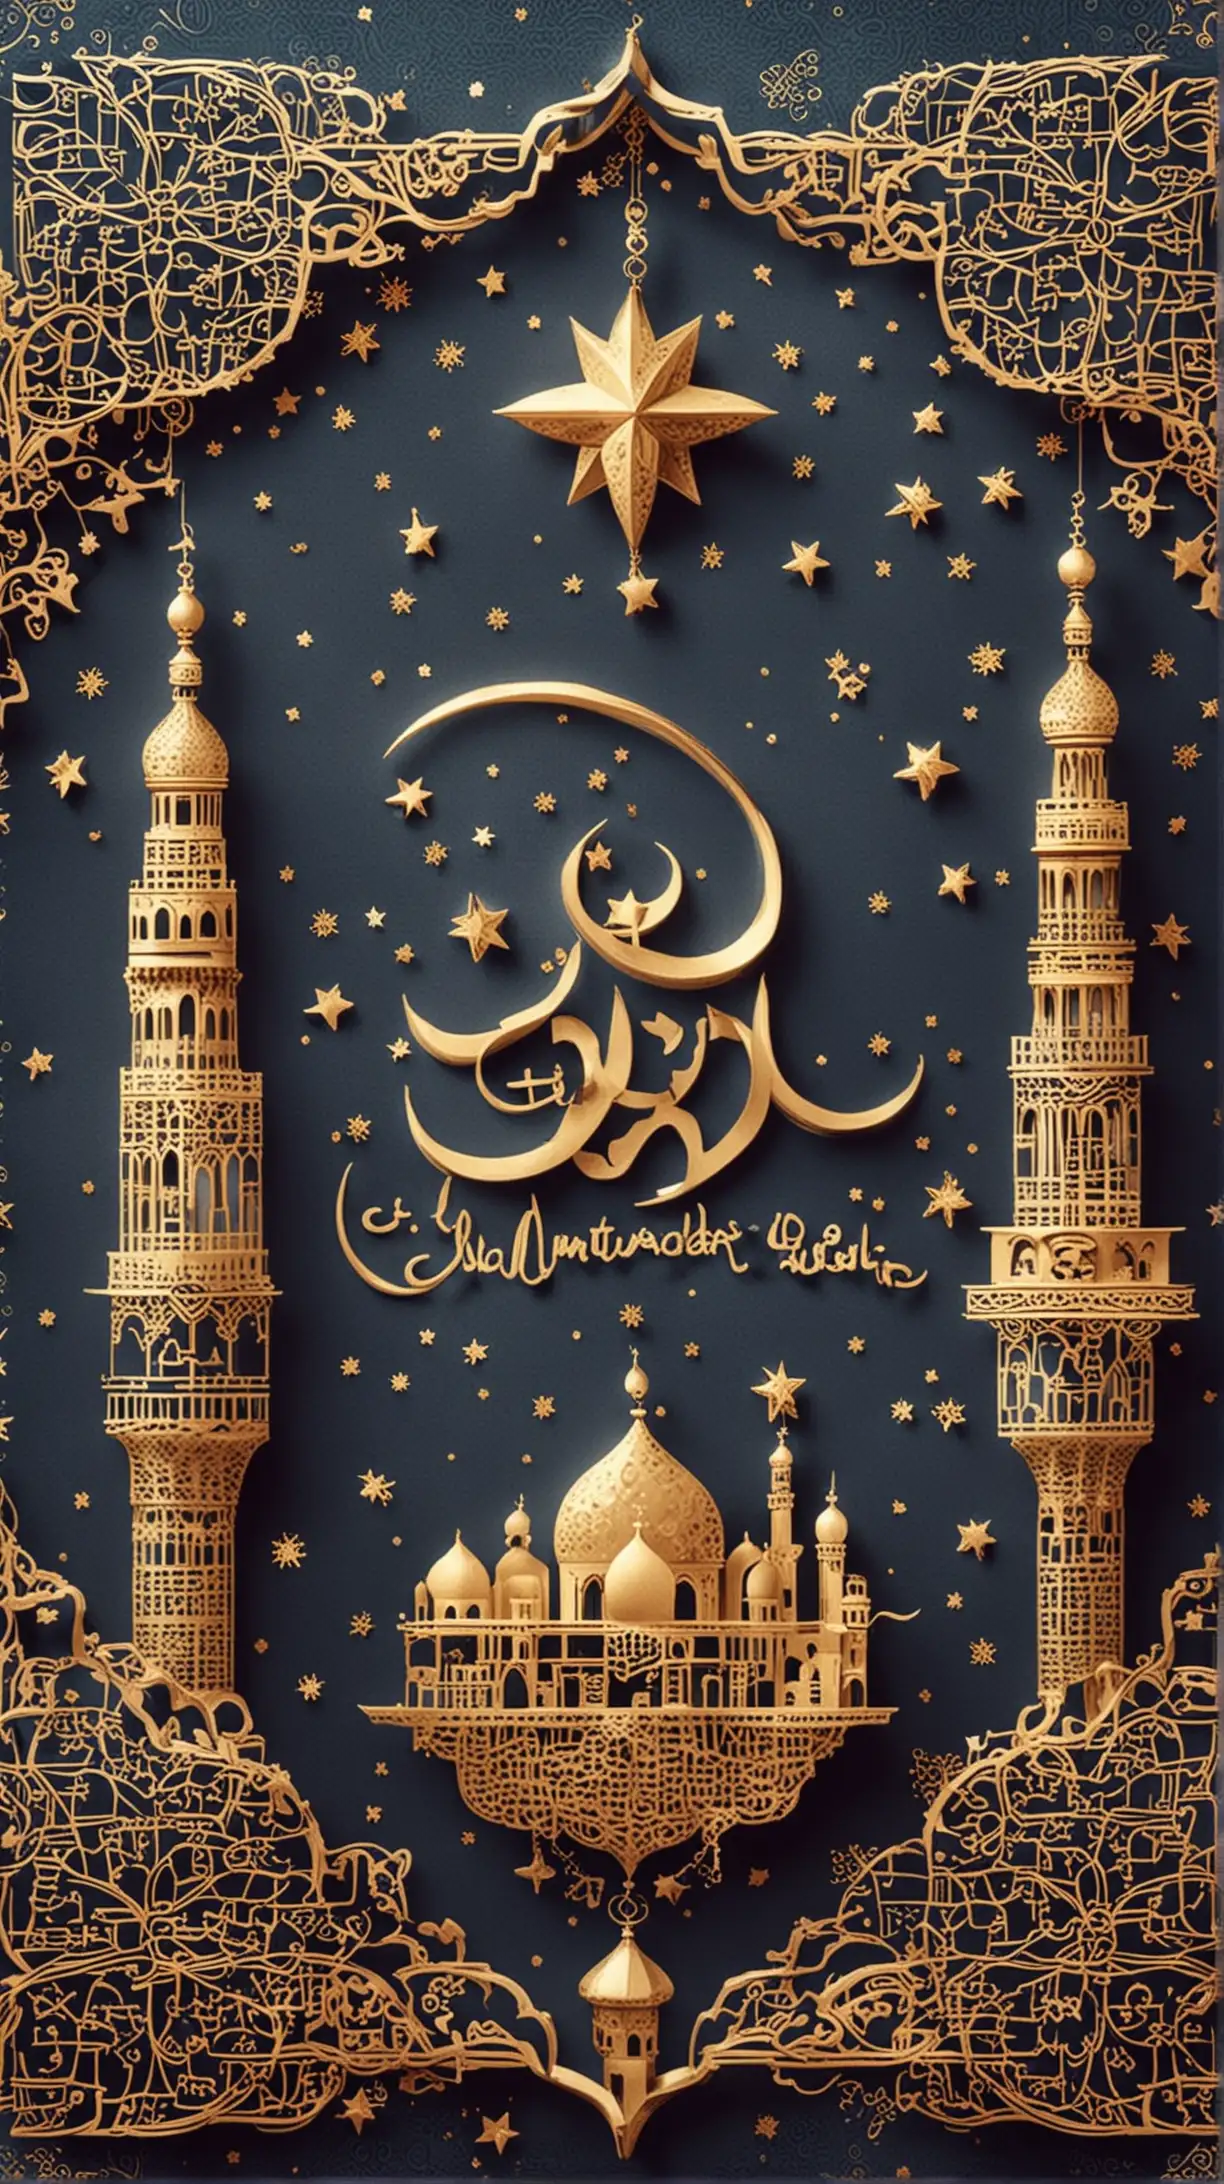 Eid mubarak greeting card